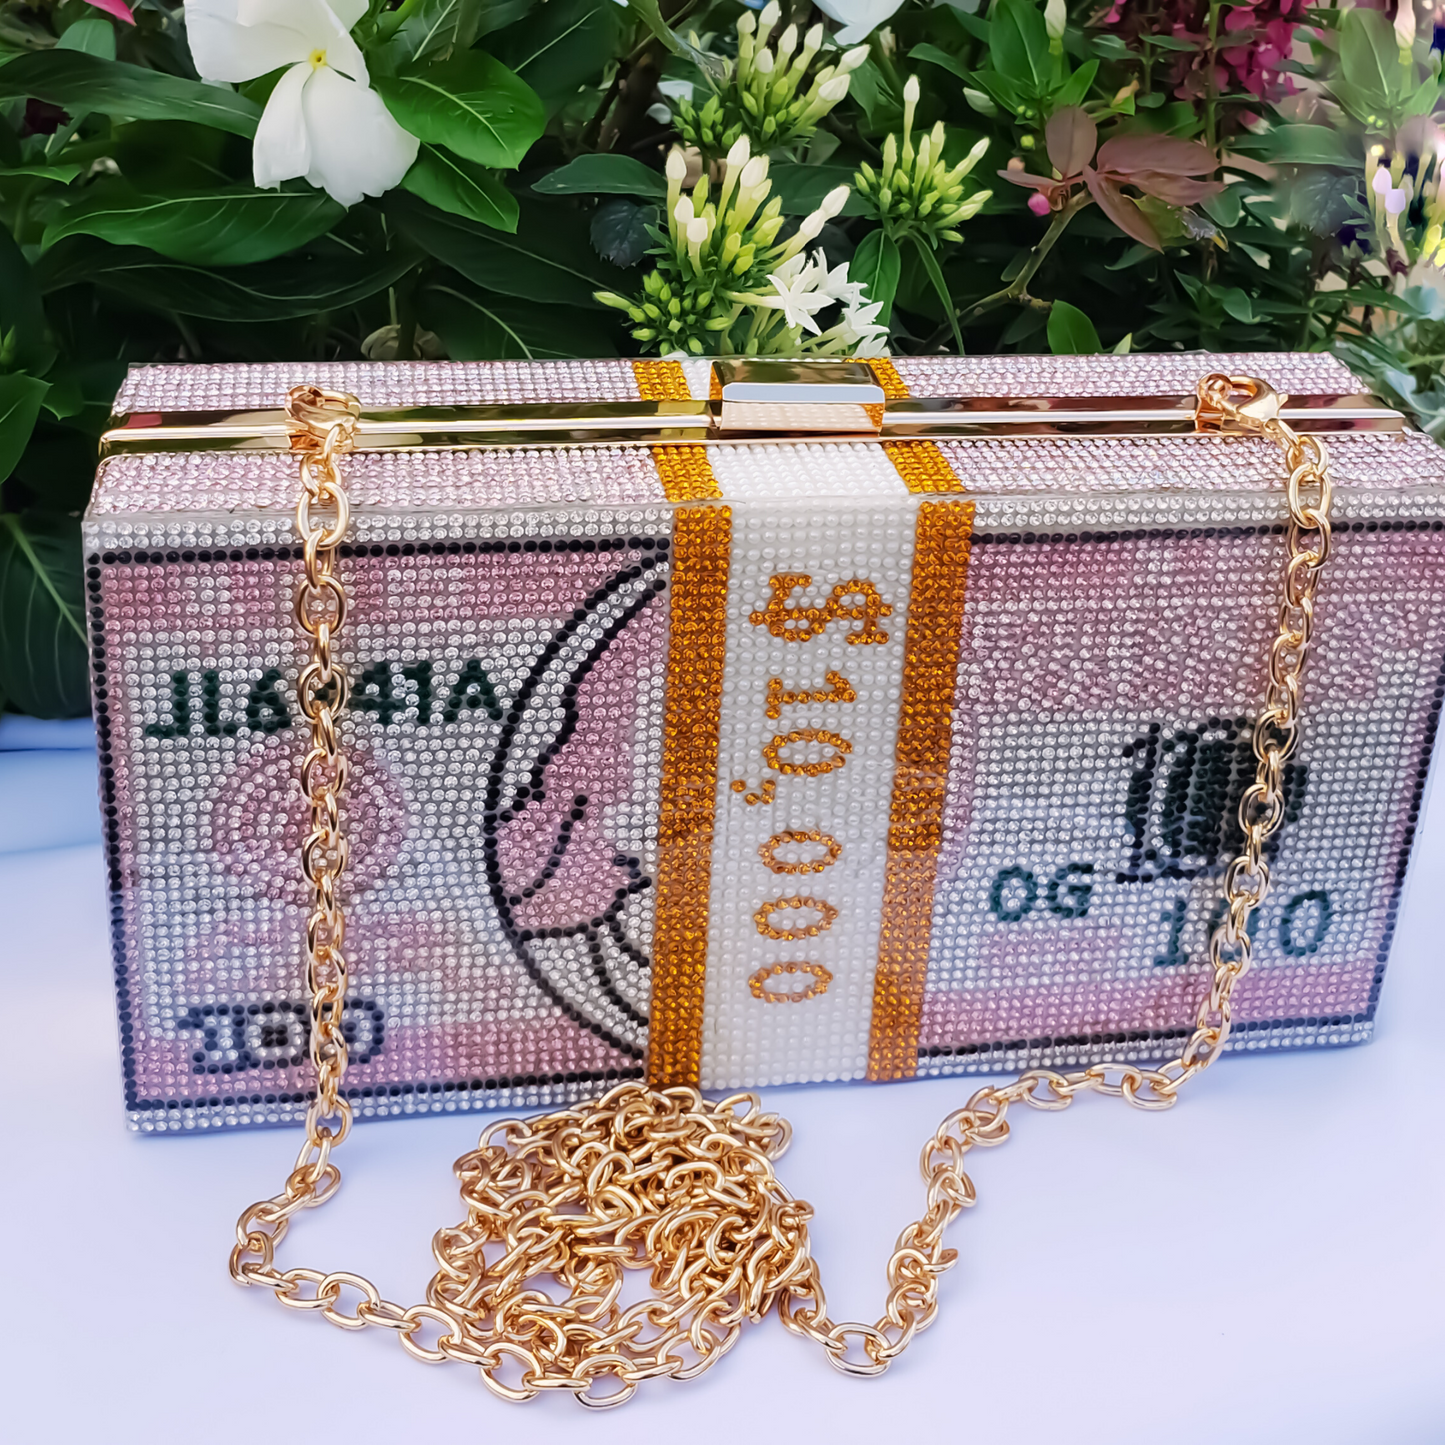 money bag, fashion purse, handbag